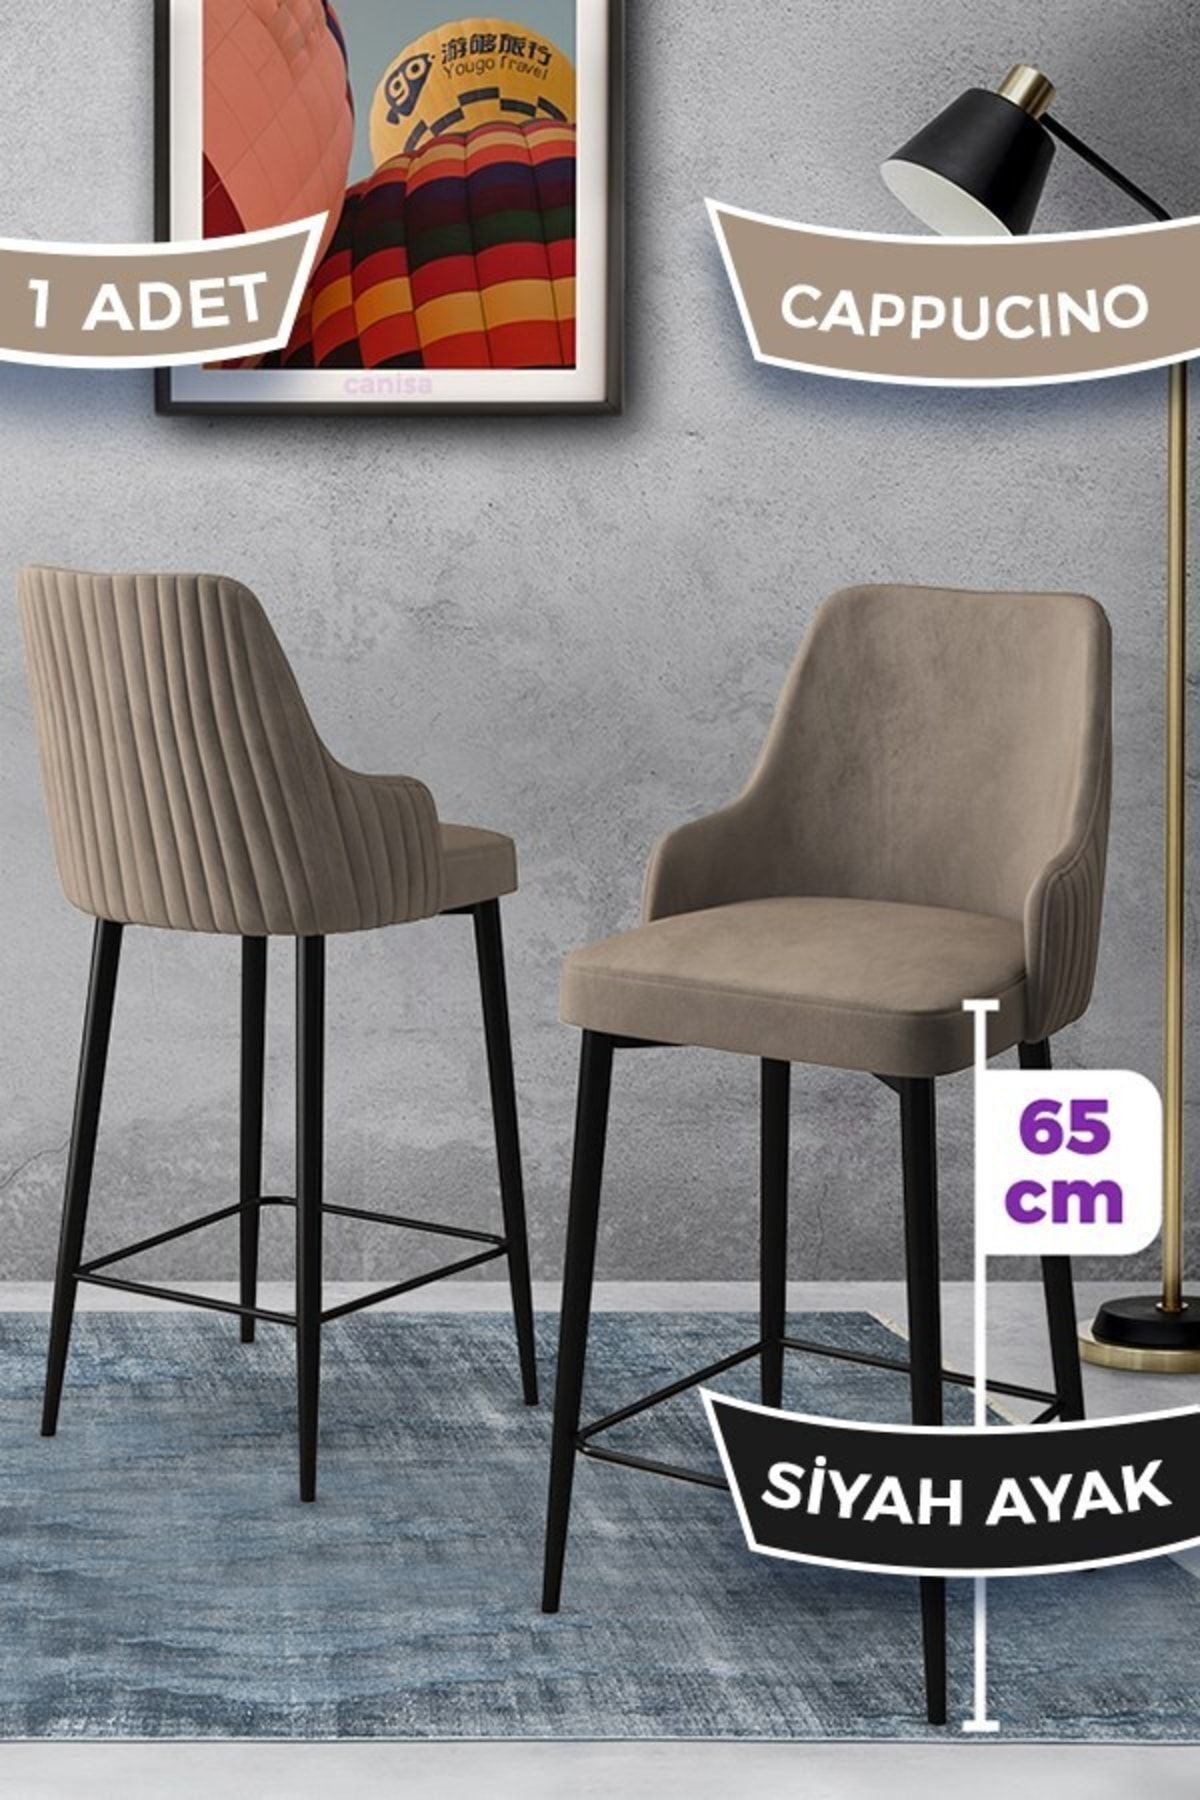 Canisa Tera Serisi 1 Adet 65 Cm Cappucino Ada Mutfak Bar Sandalyesi Babyface Kumaş Siyah Metal Ayaklı